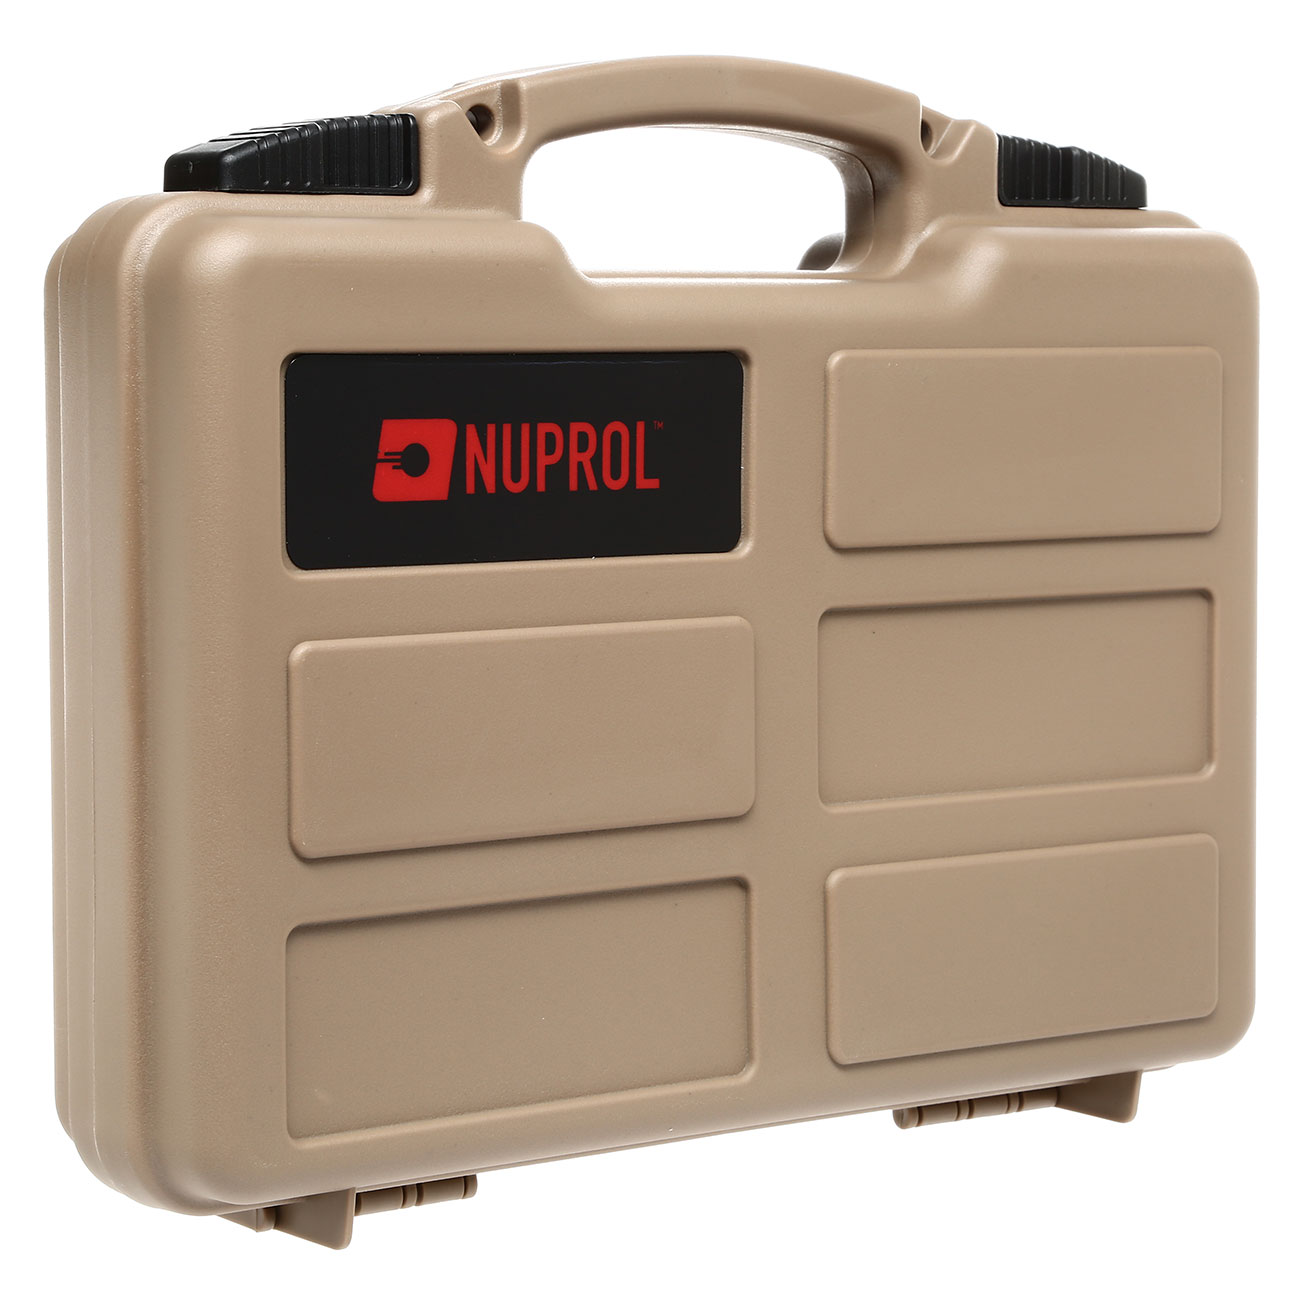 Nuprol Small Hard Case Pistolenkoffer 31 x 21 x 6,5 cm Waben-Schaumstoff tan Bild 1